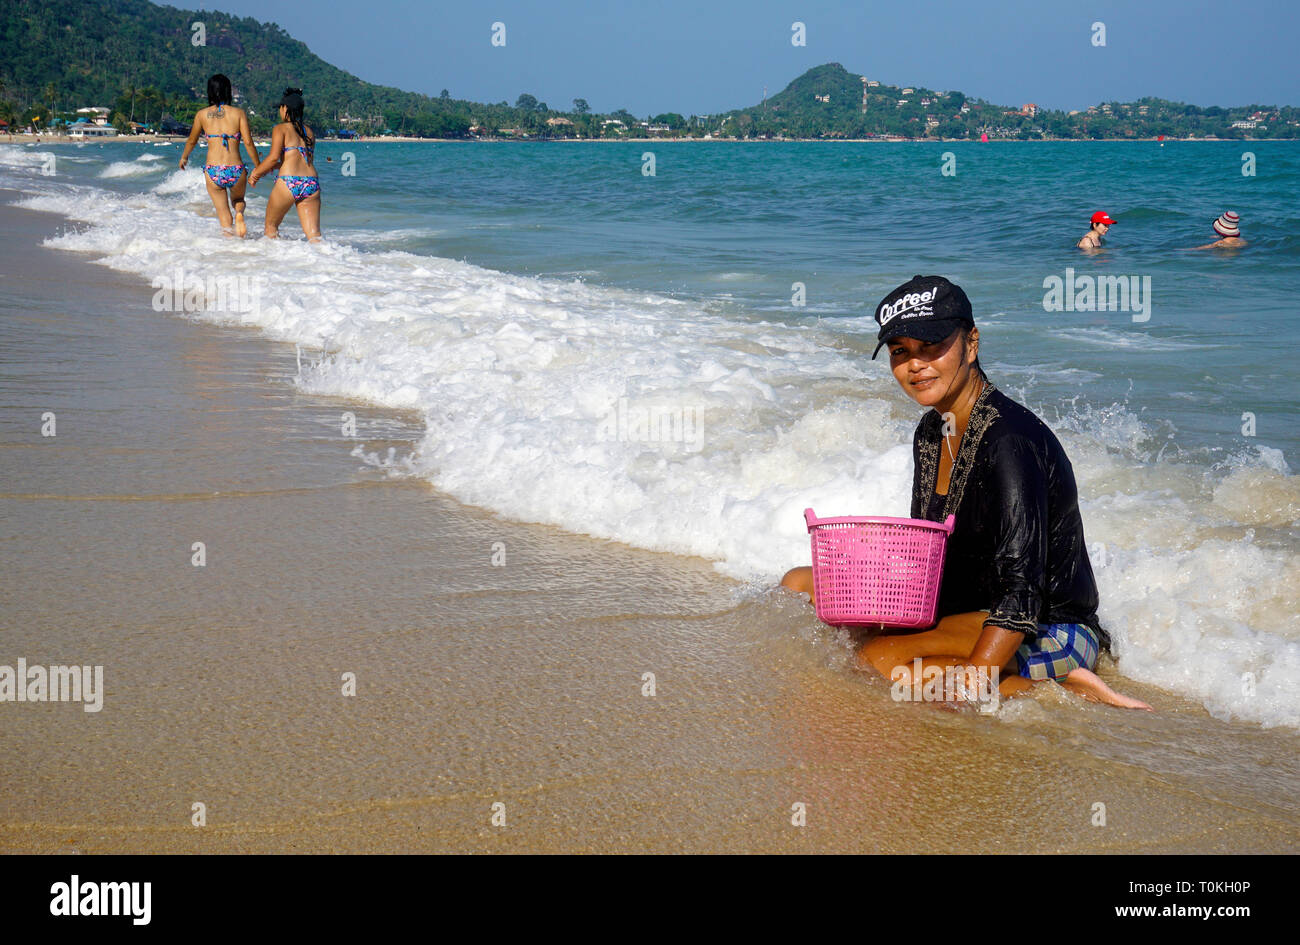 Thai woman digging for mussels at the beach, Lamai Beach, Koh Samui, Gulf of Thailand, Thailand Stock Photo